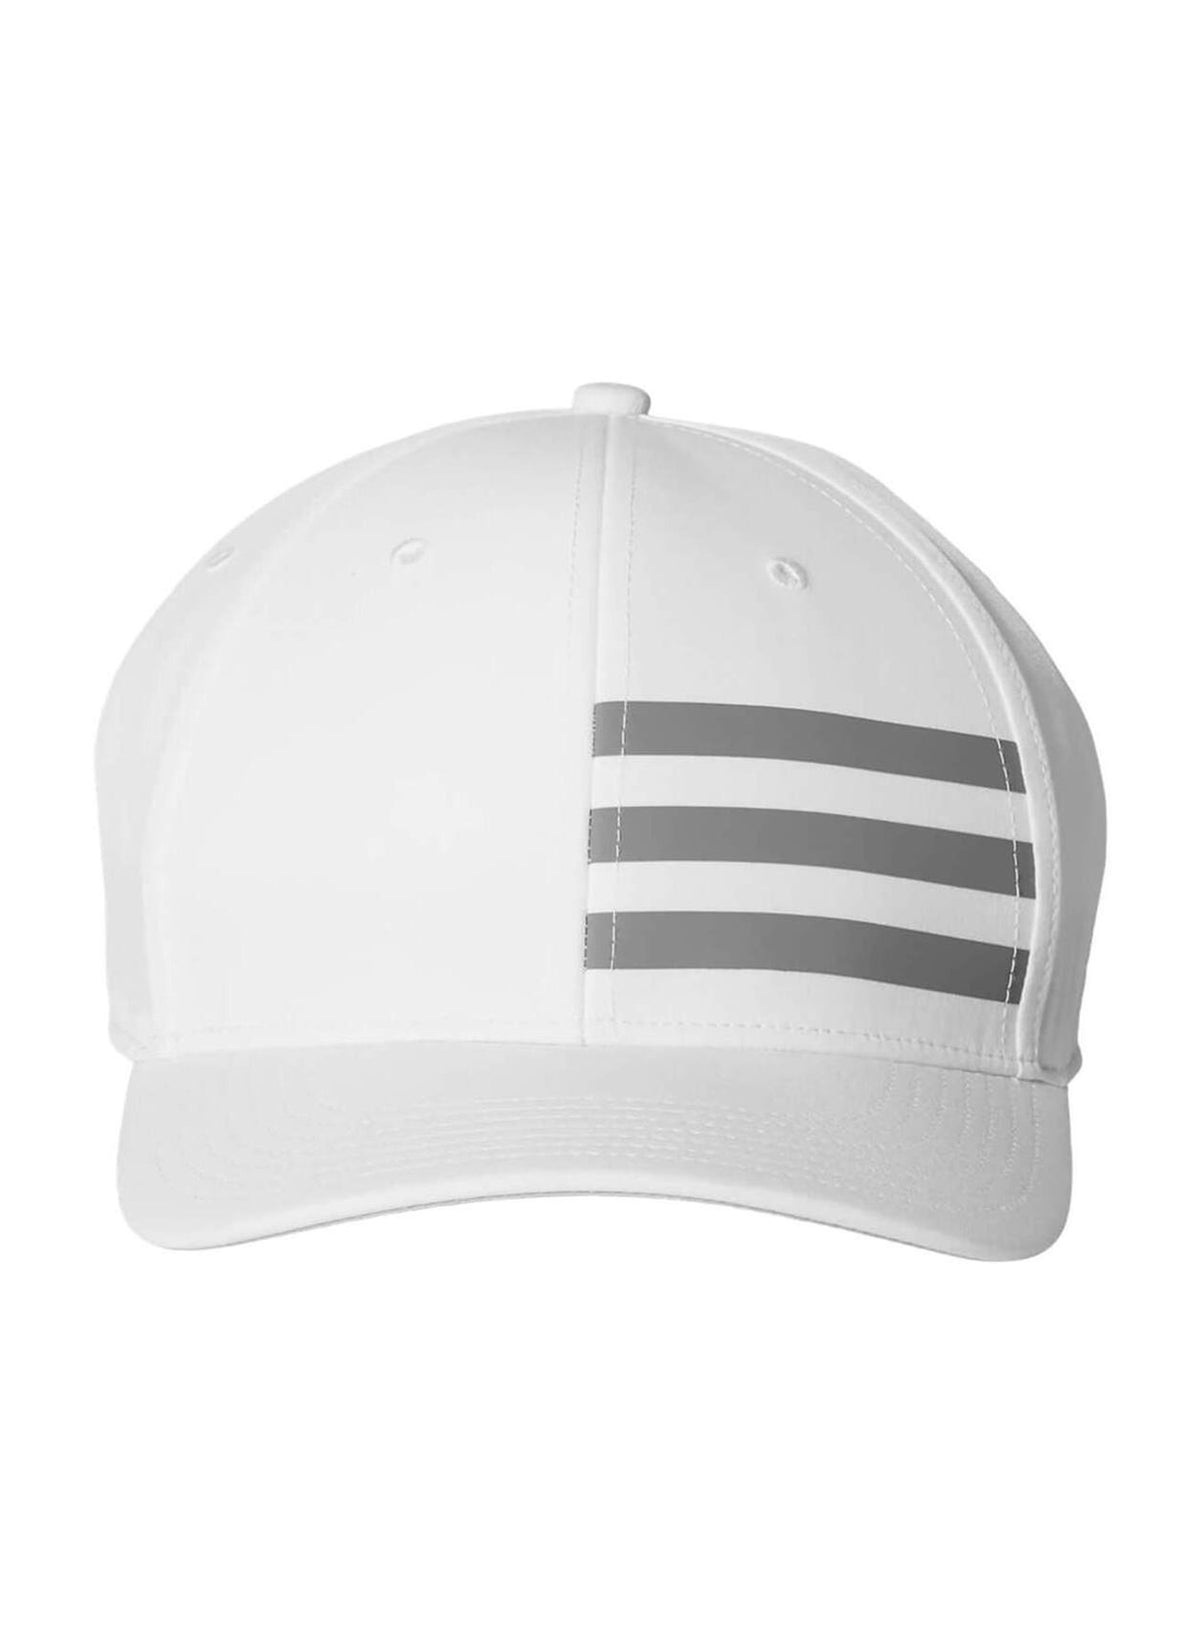 Adidas White Bold 3-Stripes Cap | Adidas 白色粗體三條紋帽子